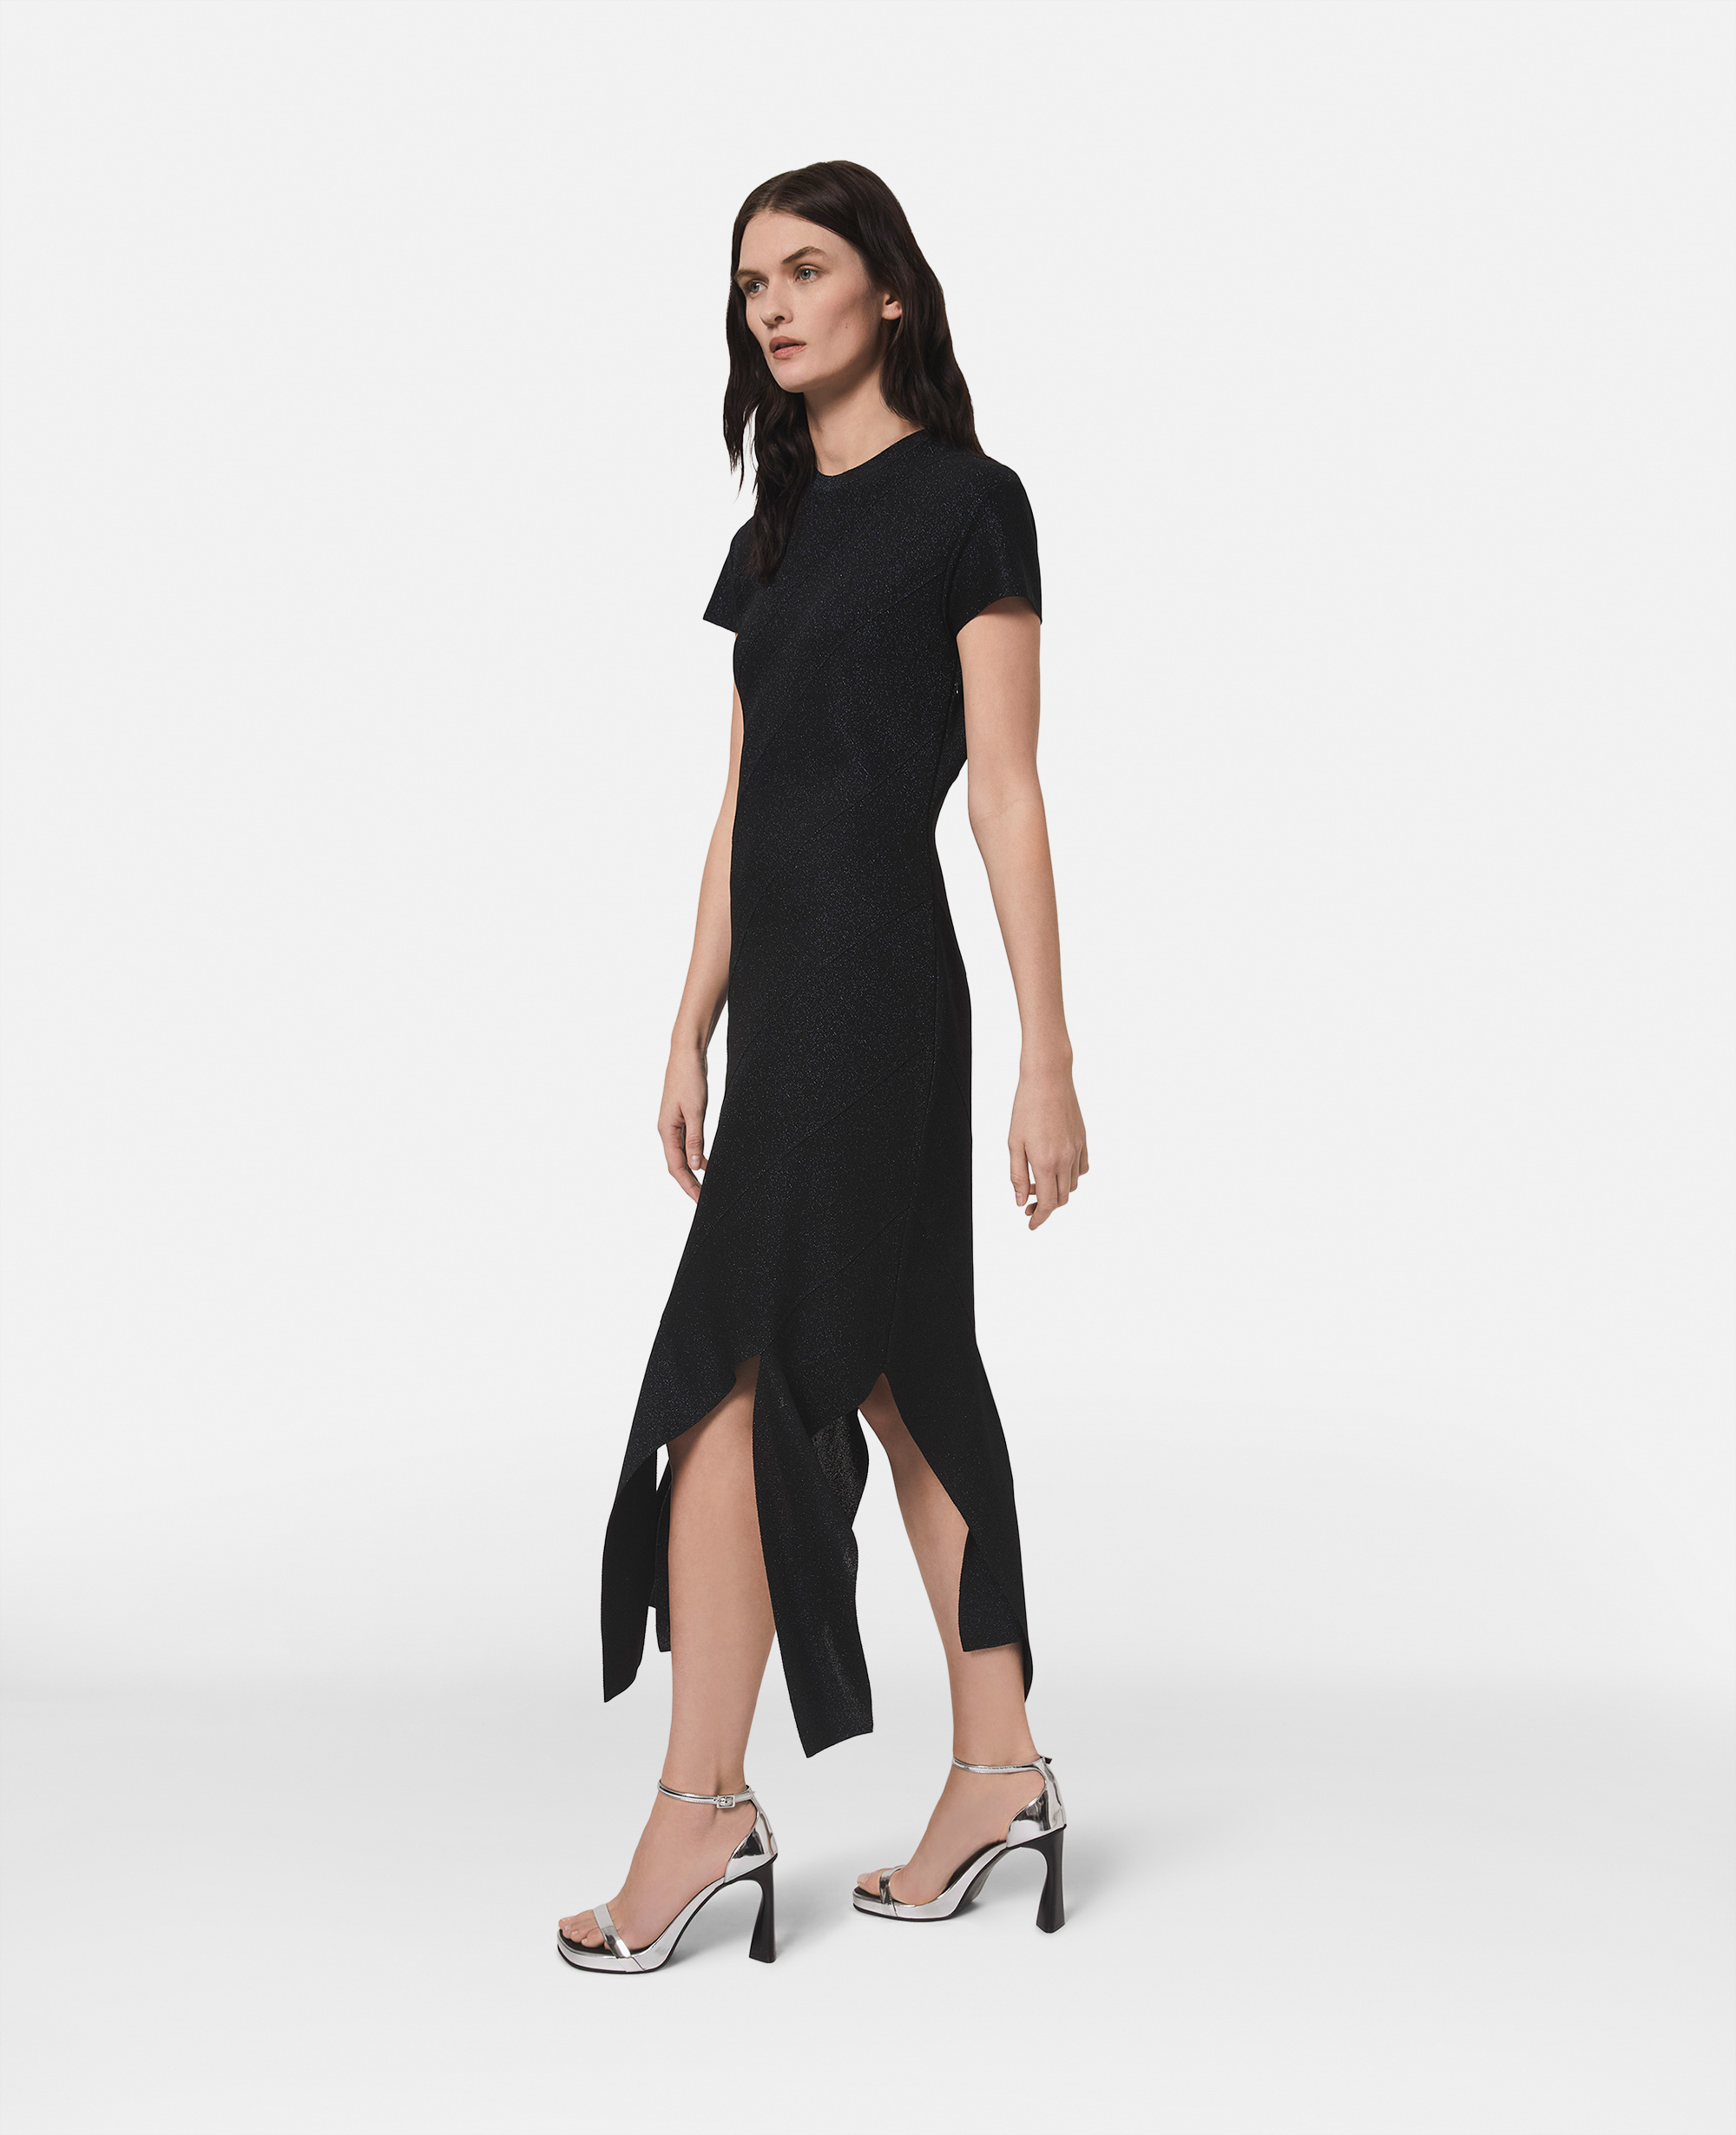 stella mccartney - lurex rib knit midi dress, woman, black/navy, size: xl